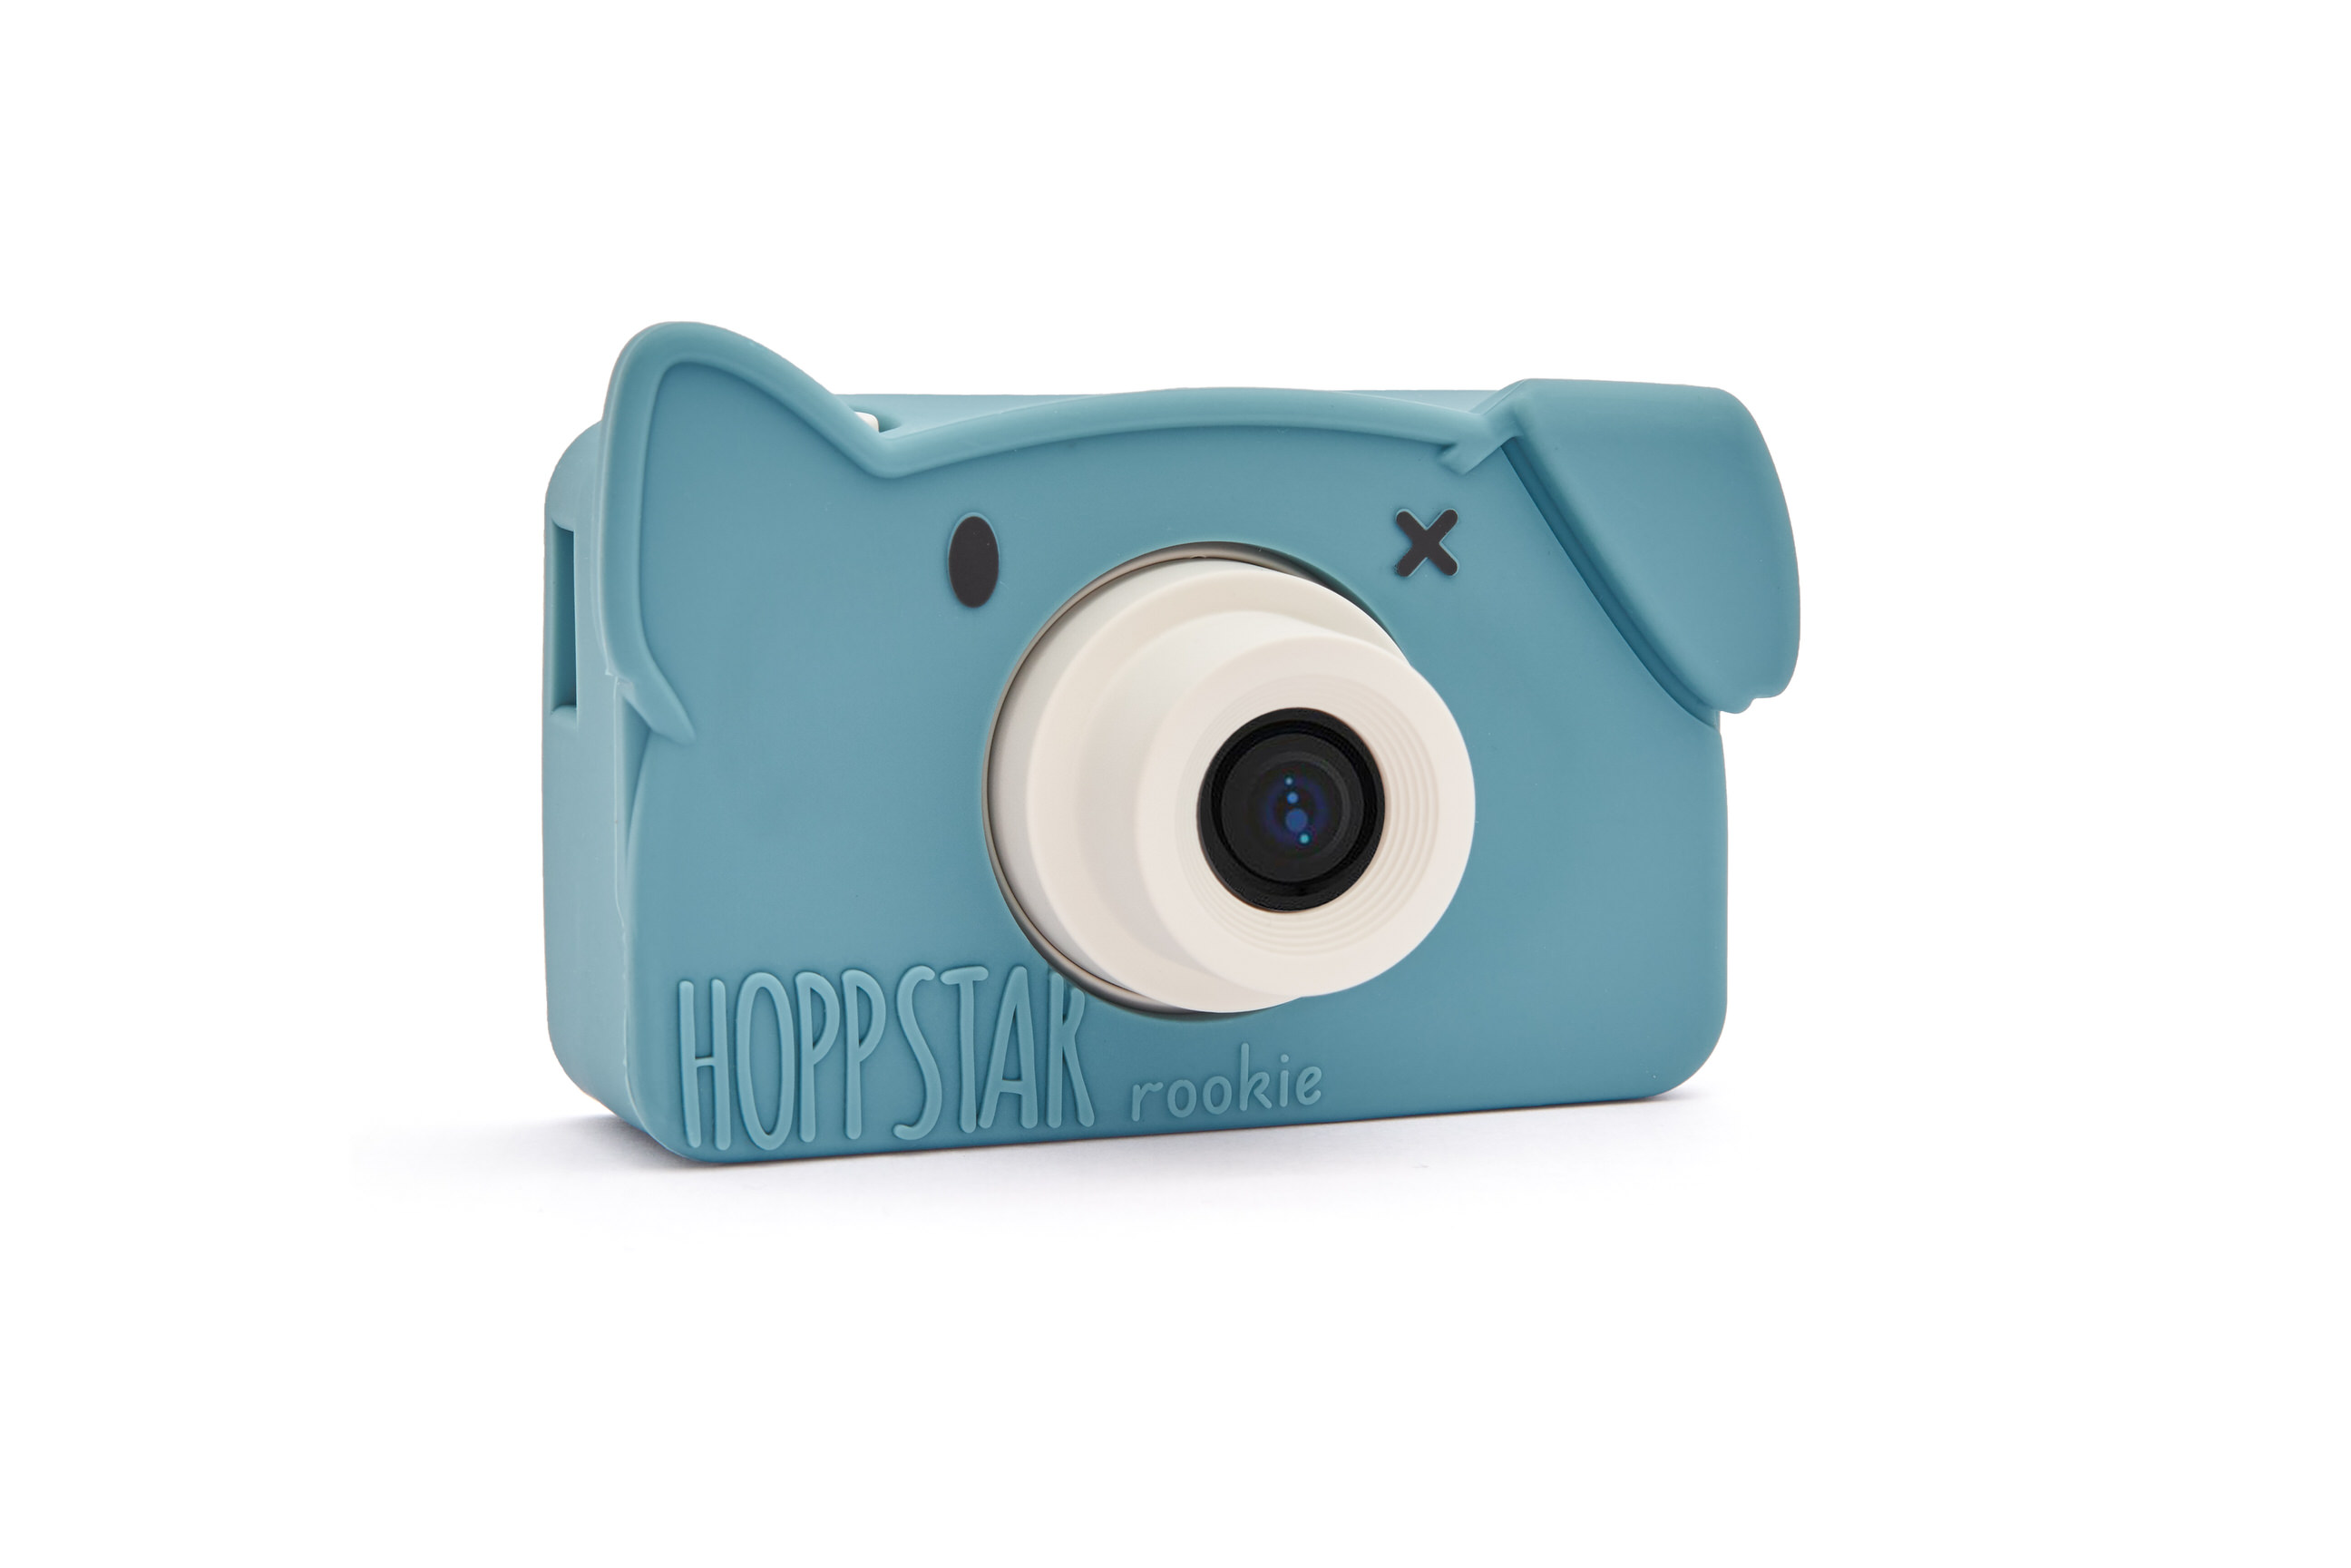 Hoppstar Rookie Kamera mit Bär Yale (blau) Silikonhülle, Frontalansicht leicht schräg